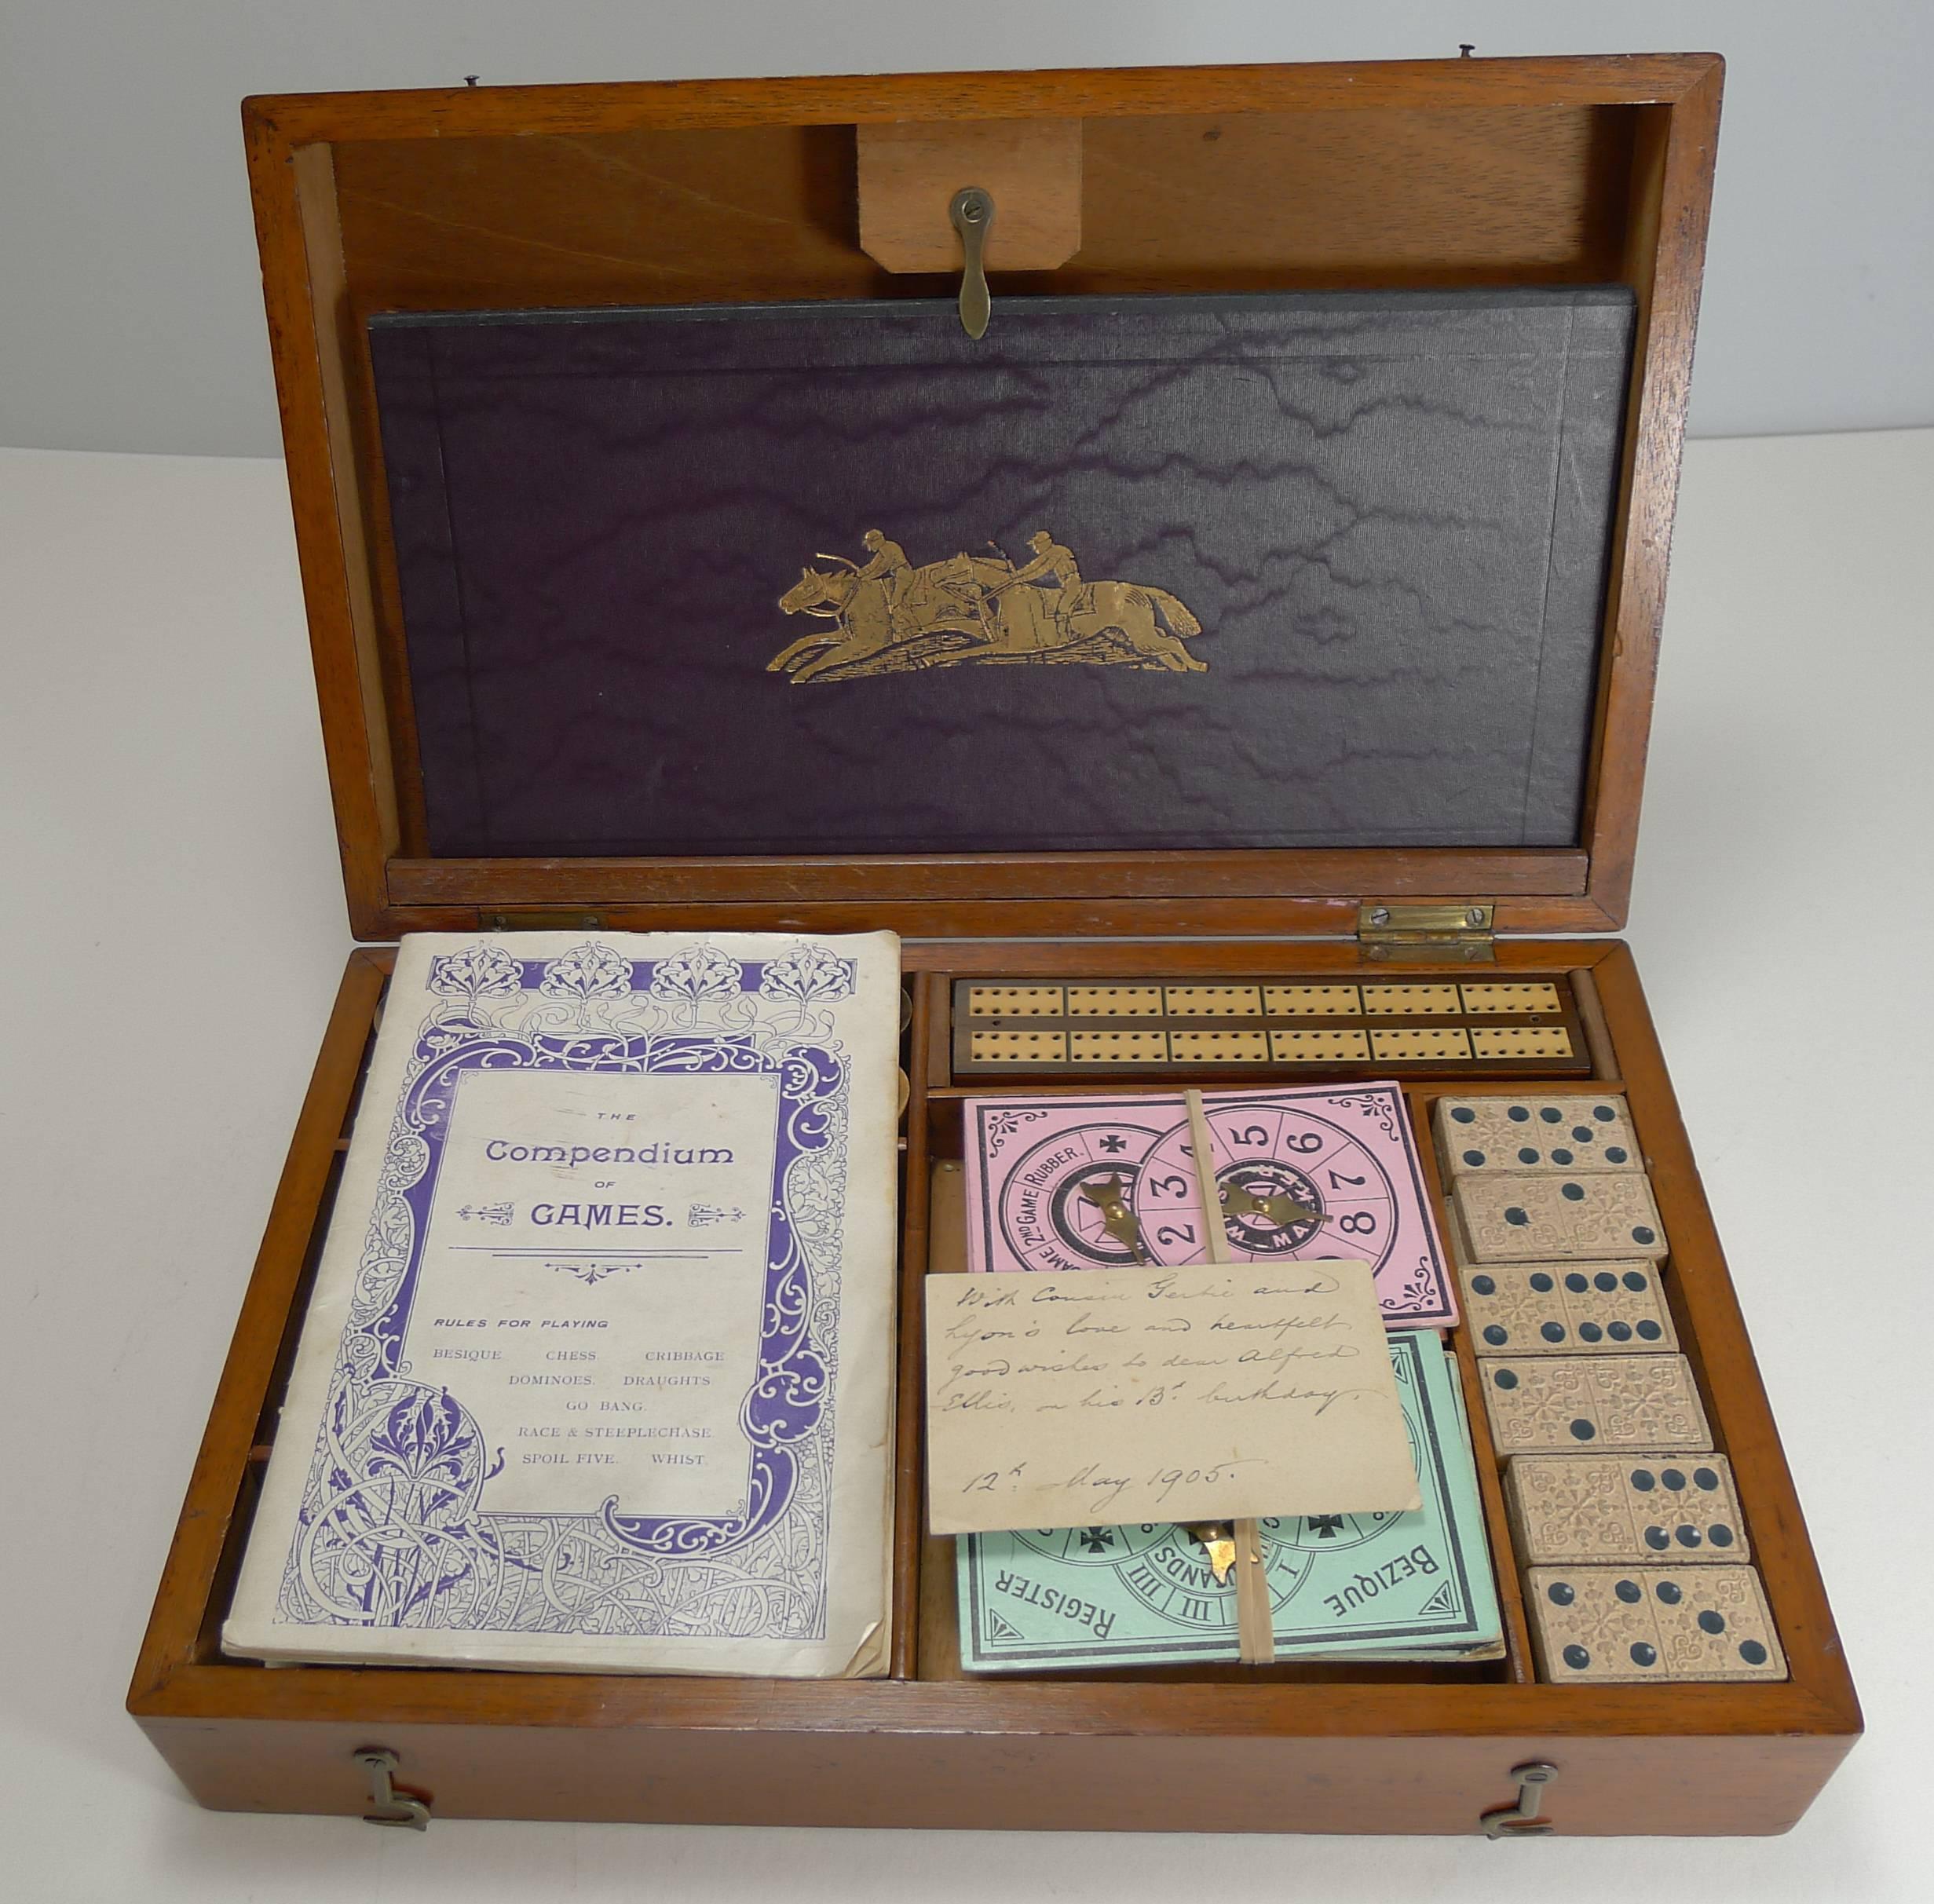 Edwardian Antique English Games Box / Compendium, circa 1905